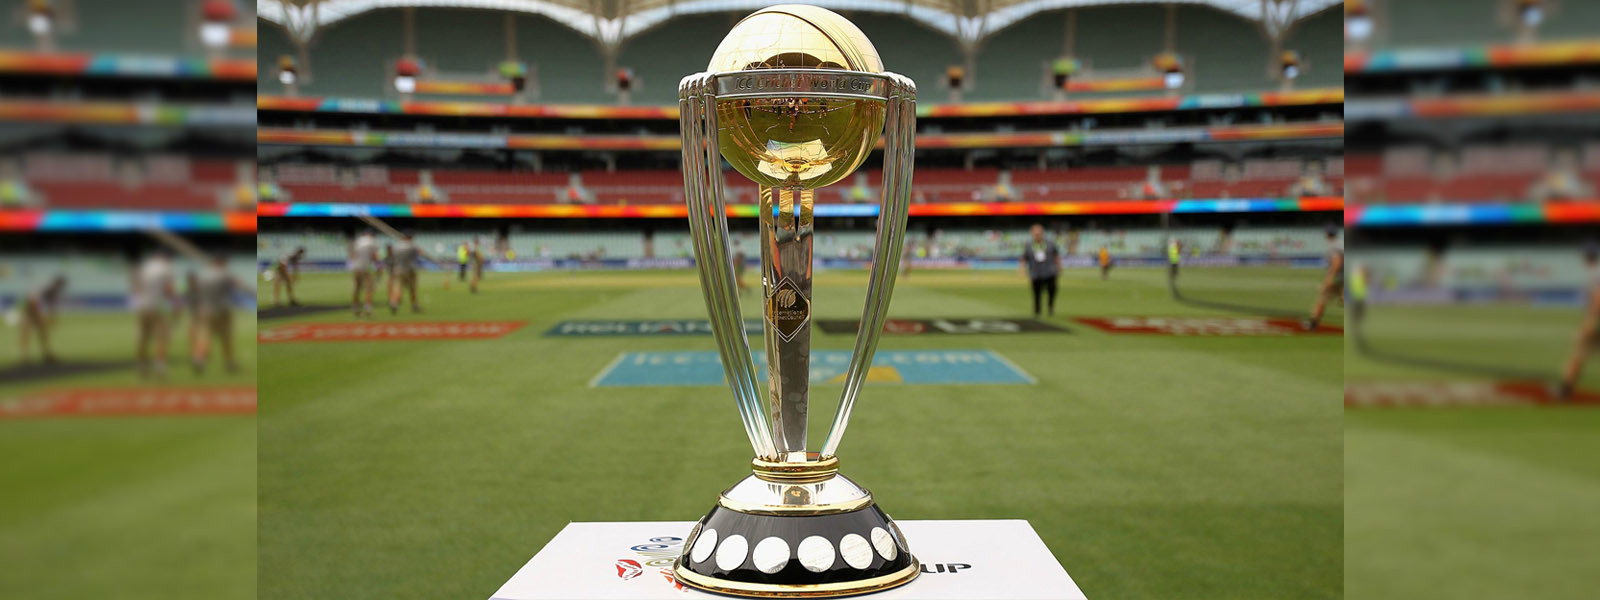 2019 cricket world cup trophy in SL